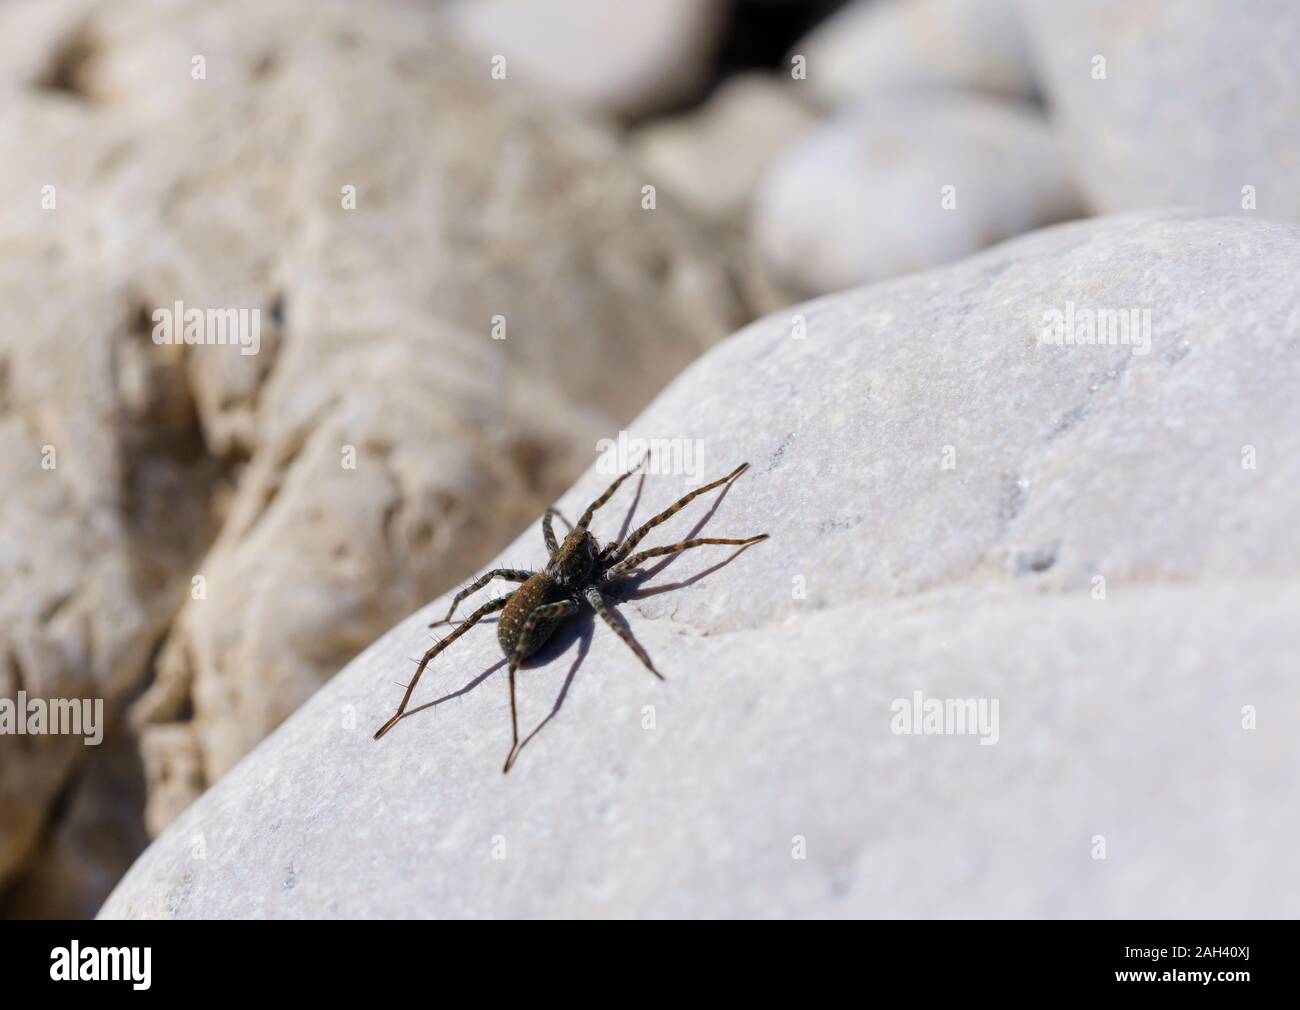 Germany, Bavaria, Geretsried, Wolf spider (Arctosa maculata) lying on rock Stock Photo